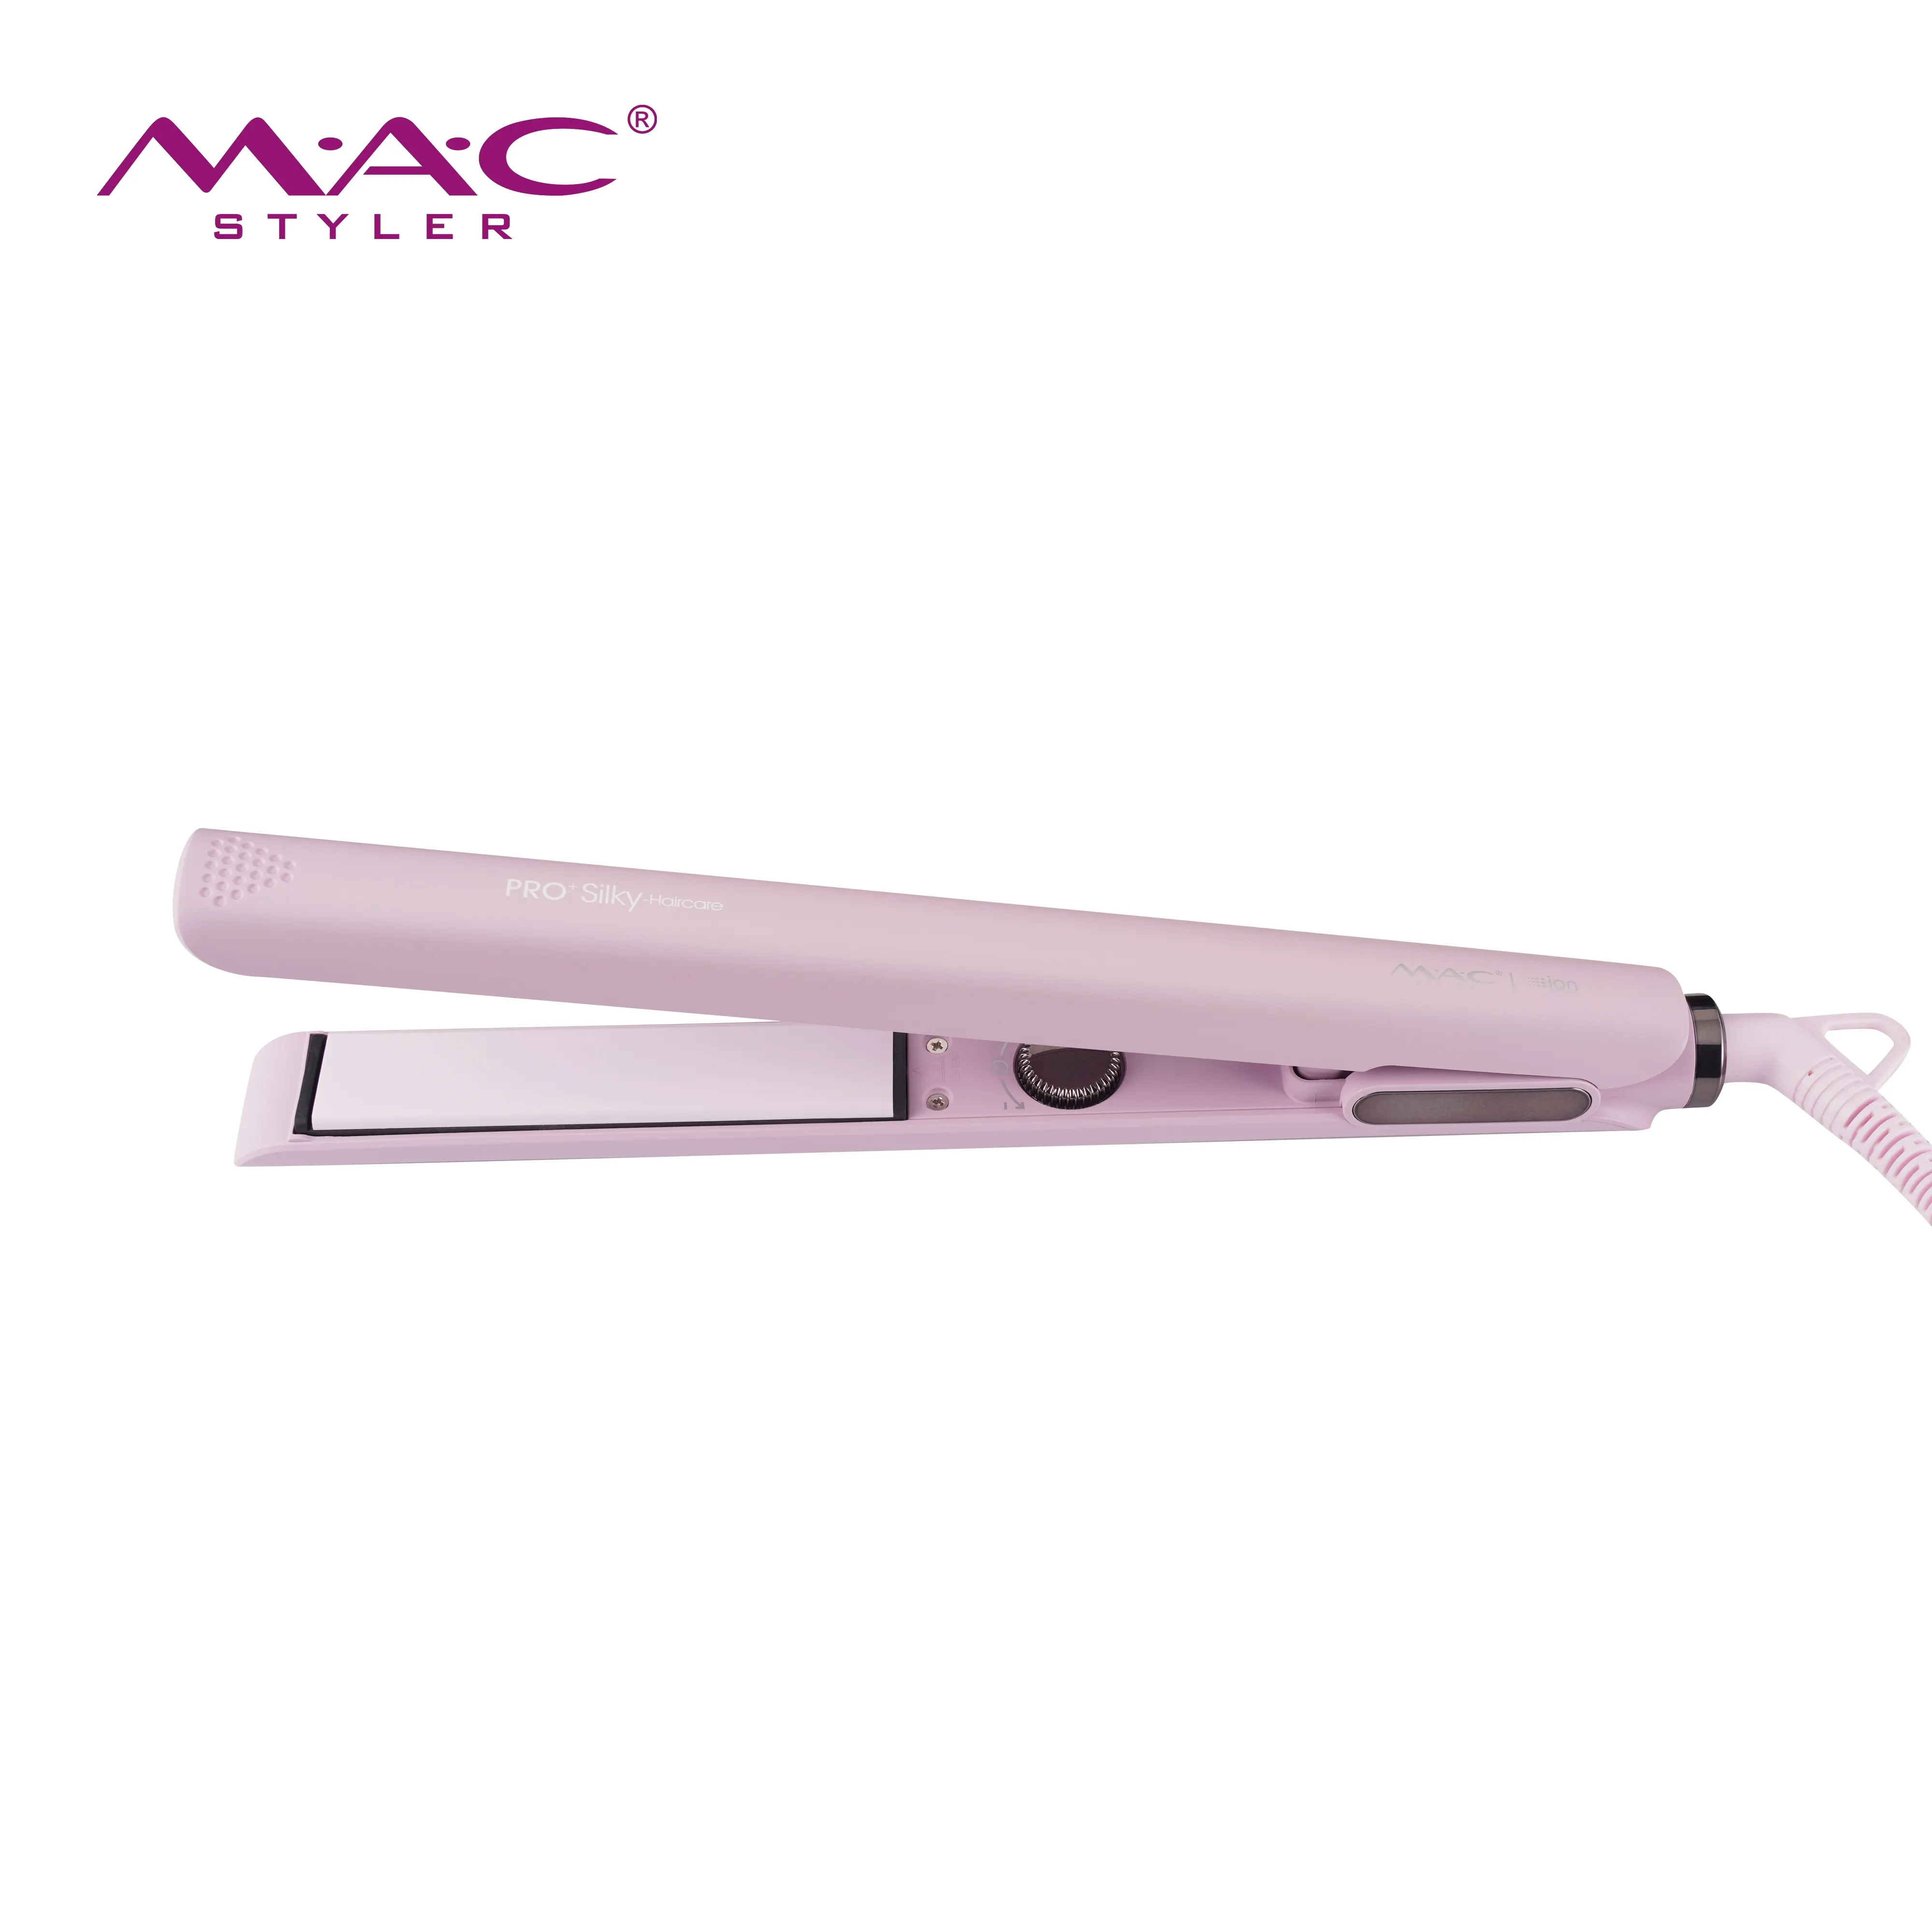 Salon perawatan kualitas tinggi besi datar tampilan Digital LCD 360 Putar sesuai perjalanan merah muda pelurus rambut profesional